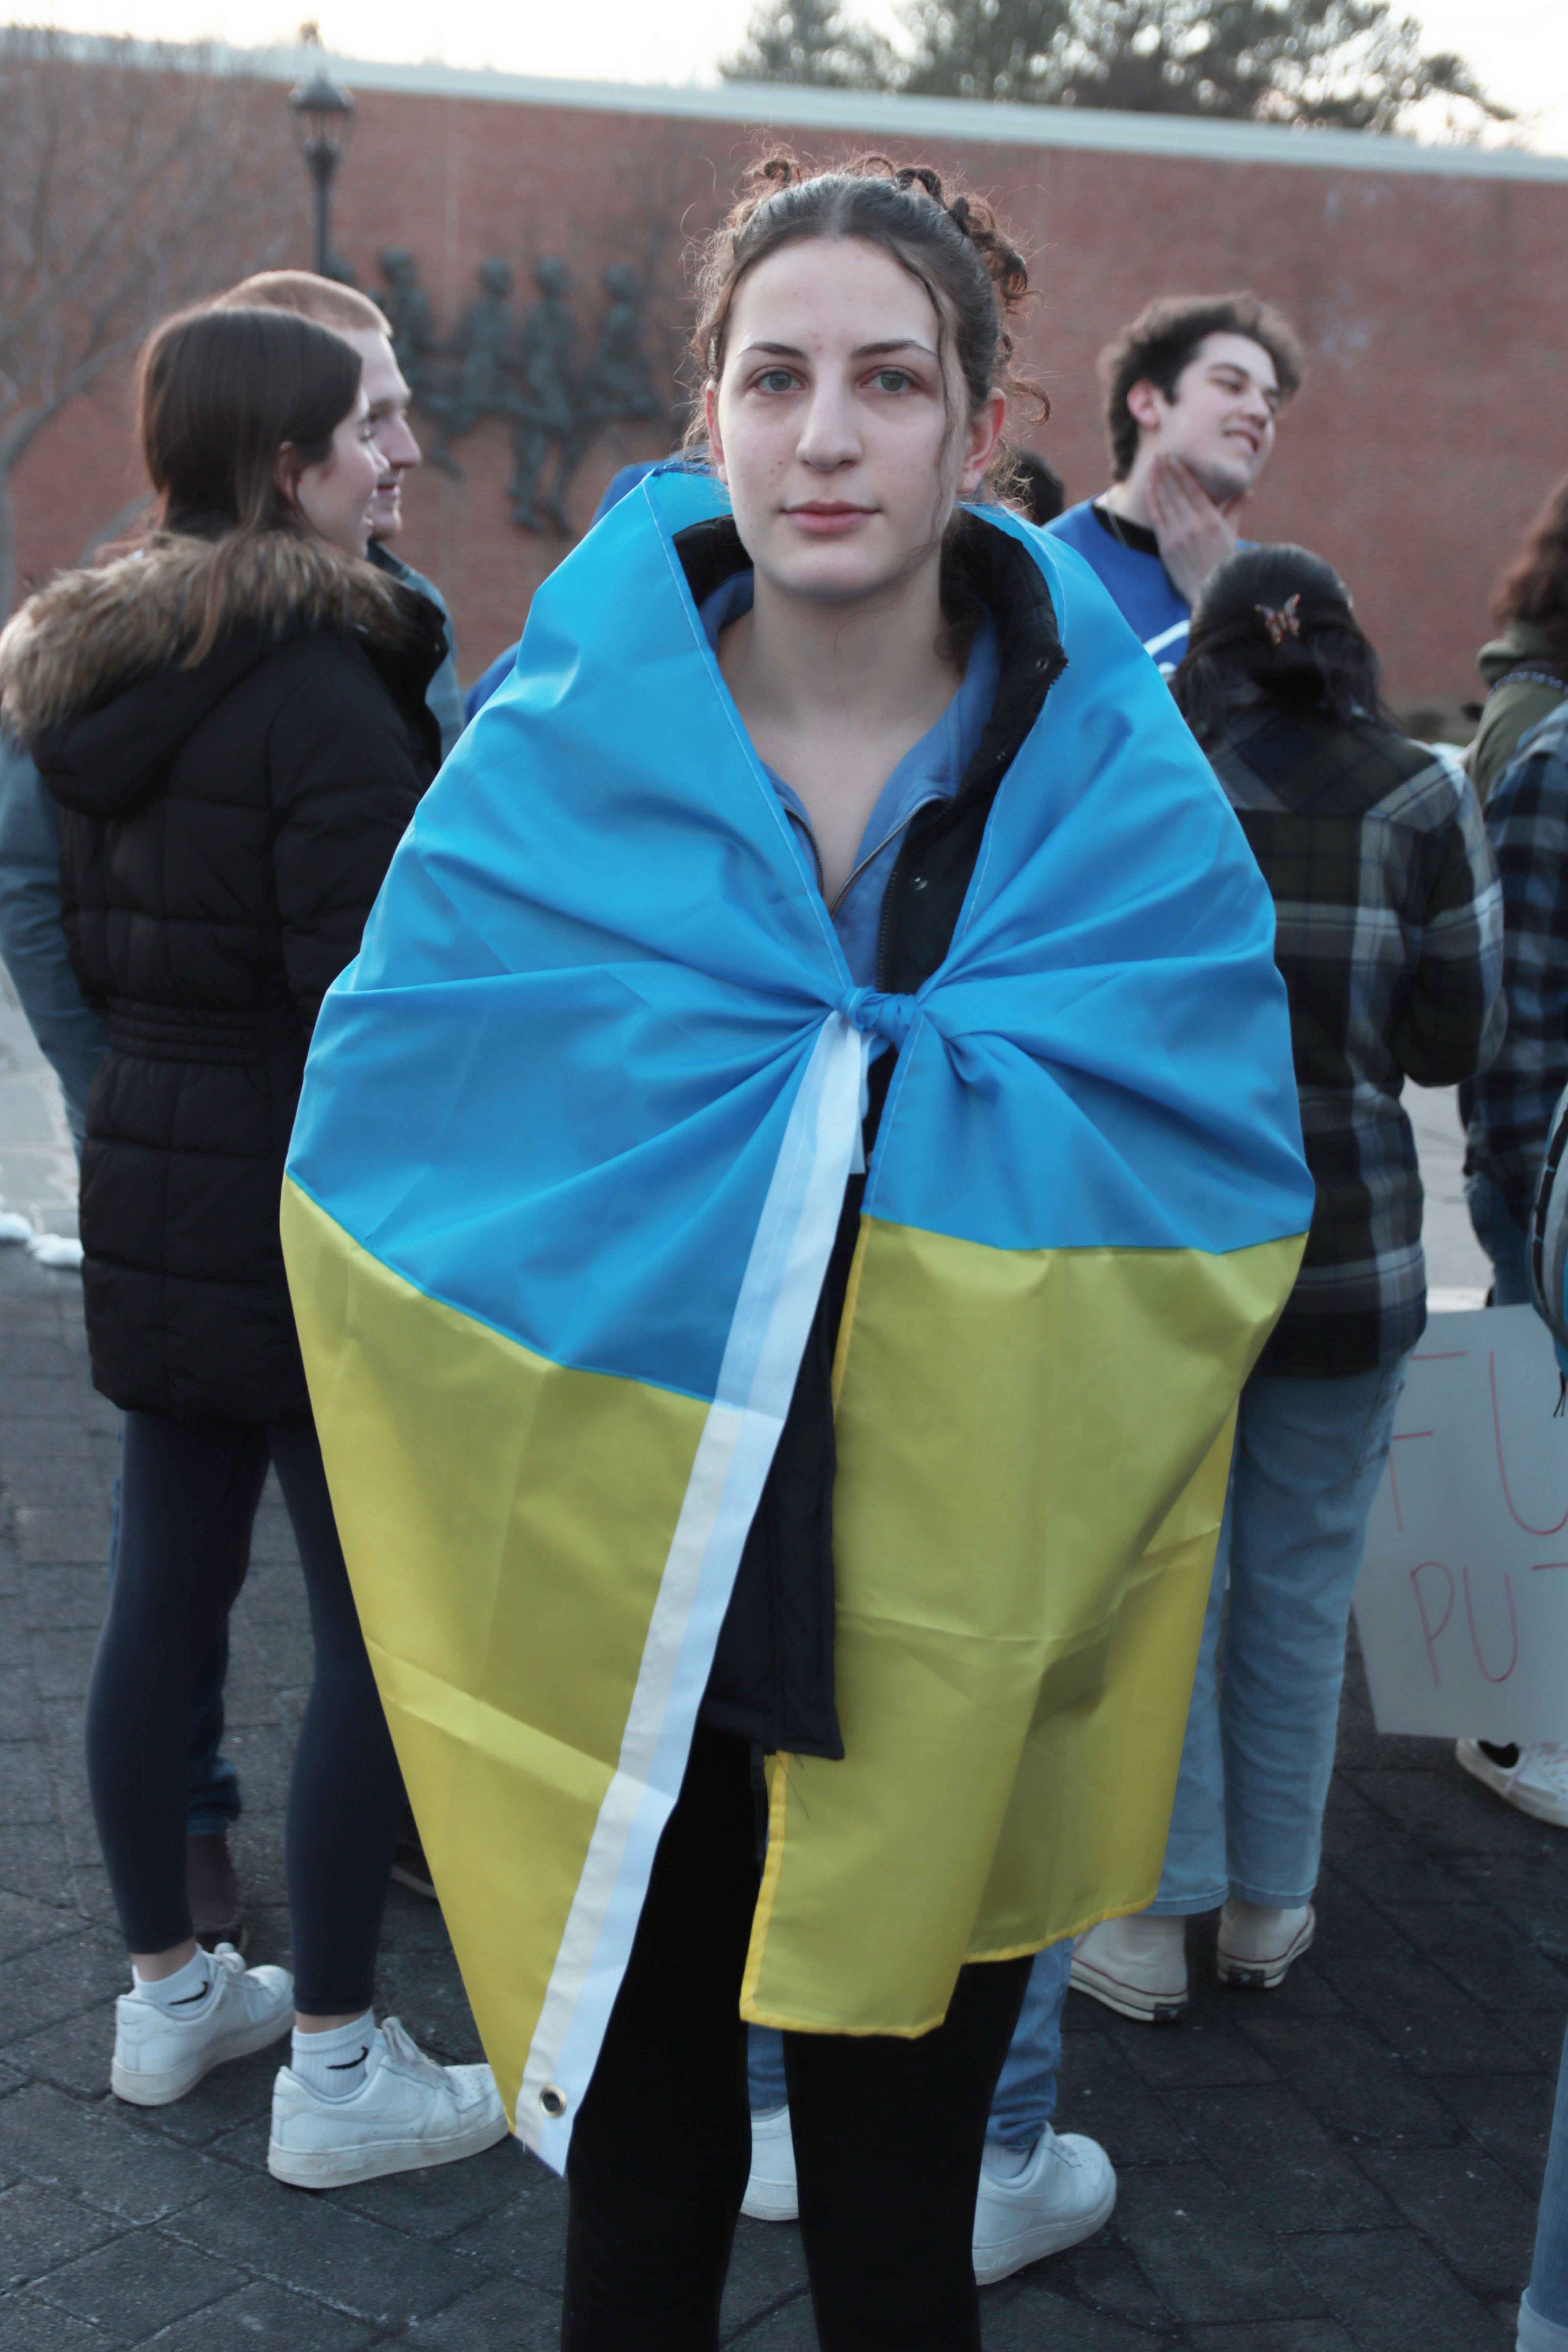 March with Ukraine